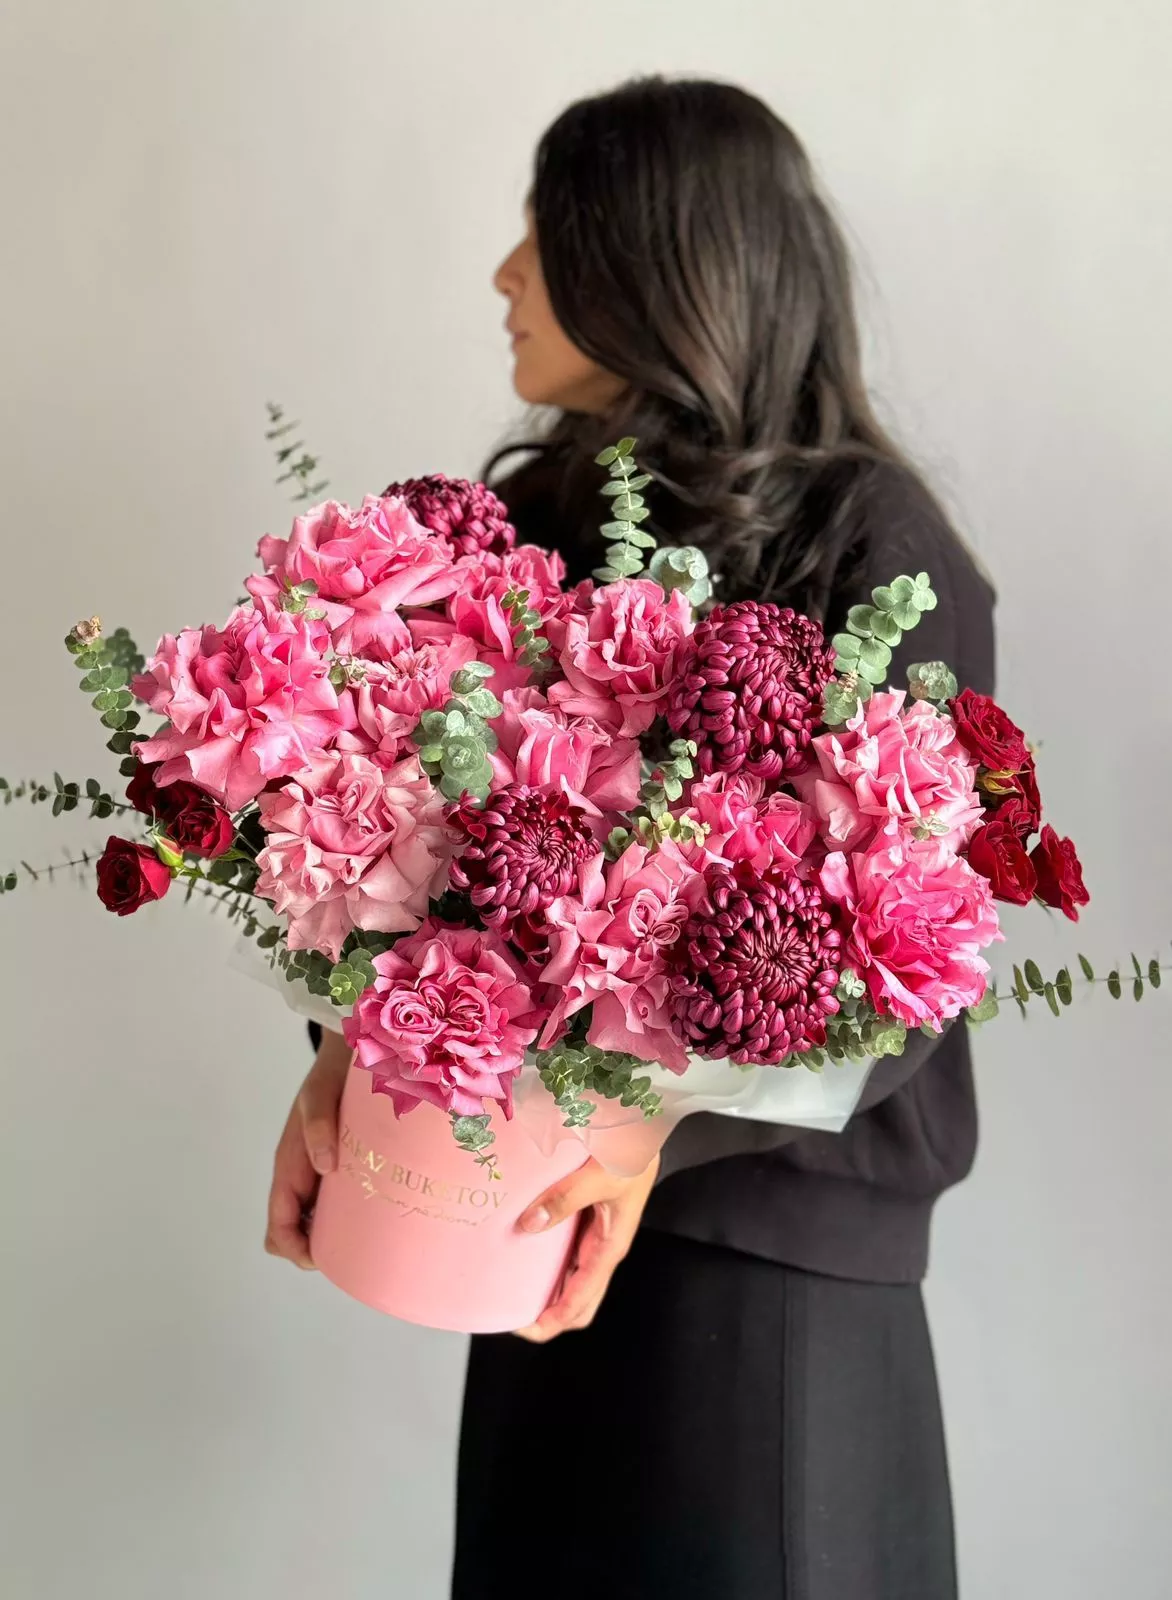 Композиция "Andre" из роз и крупноцветковых хризантем